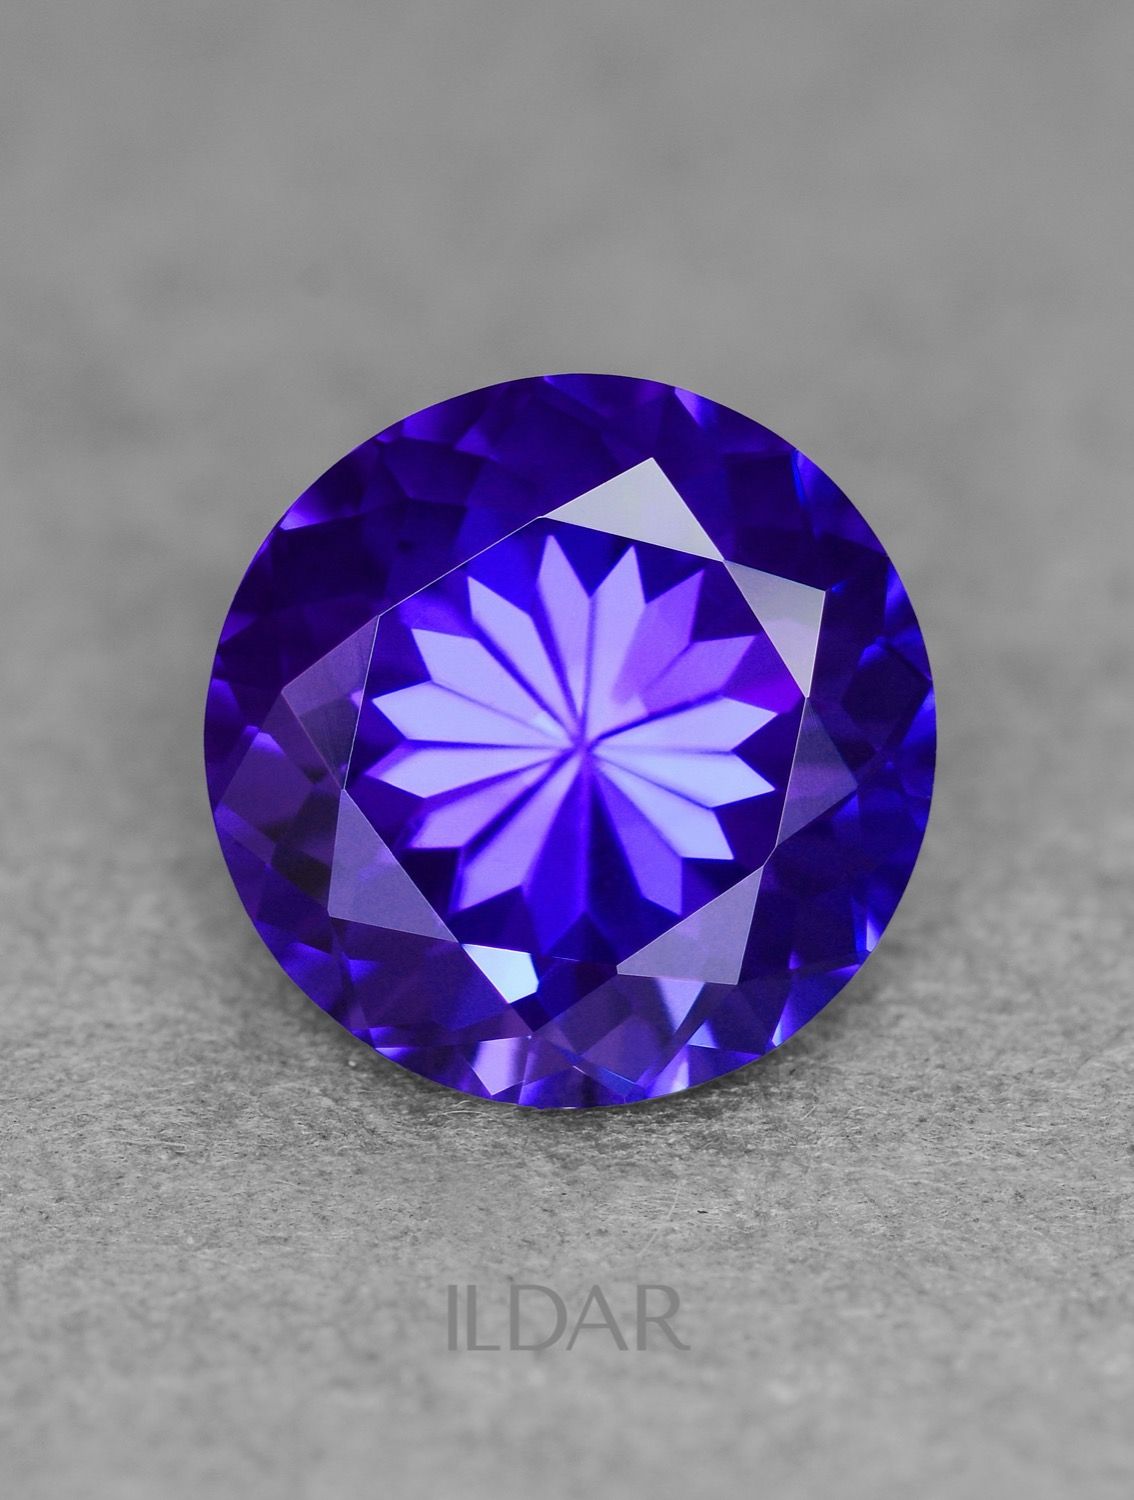 Purple tanzanite gems by ILDAR. Tanzanite is the blue and